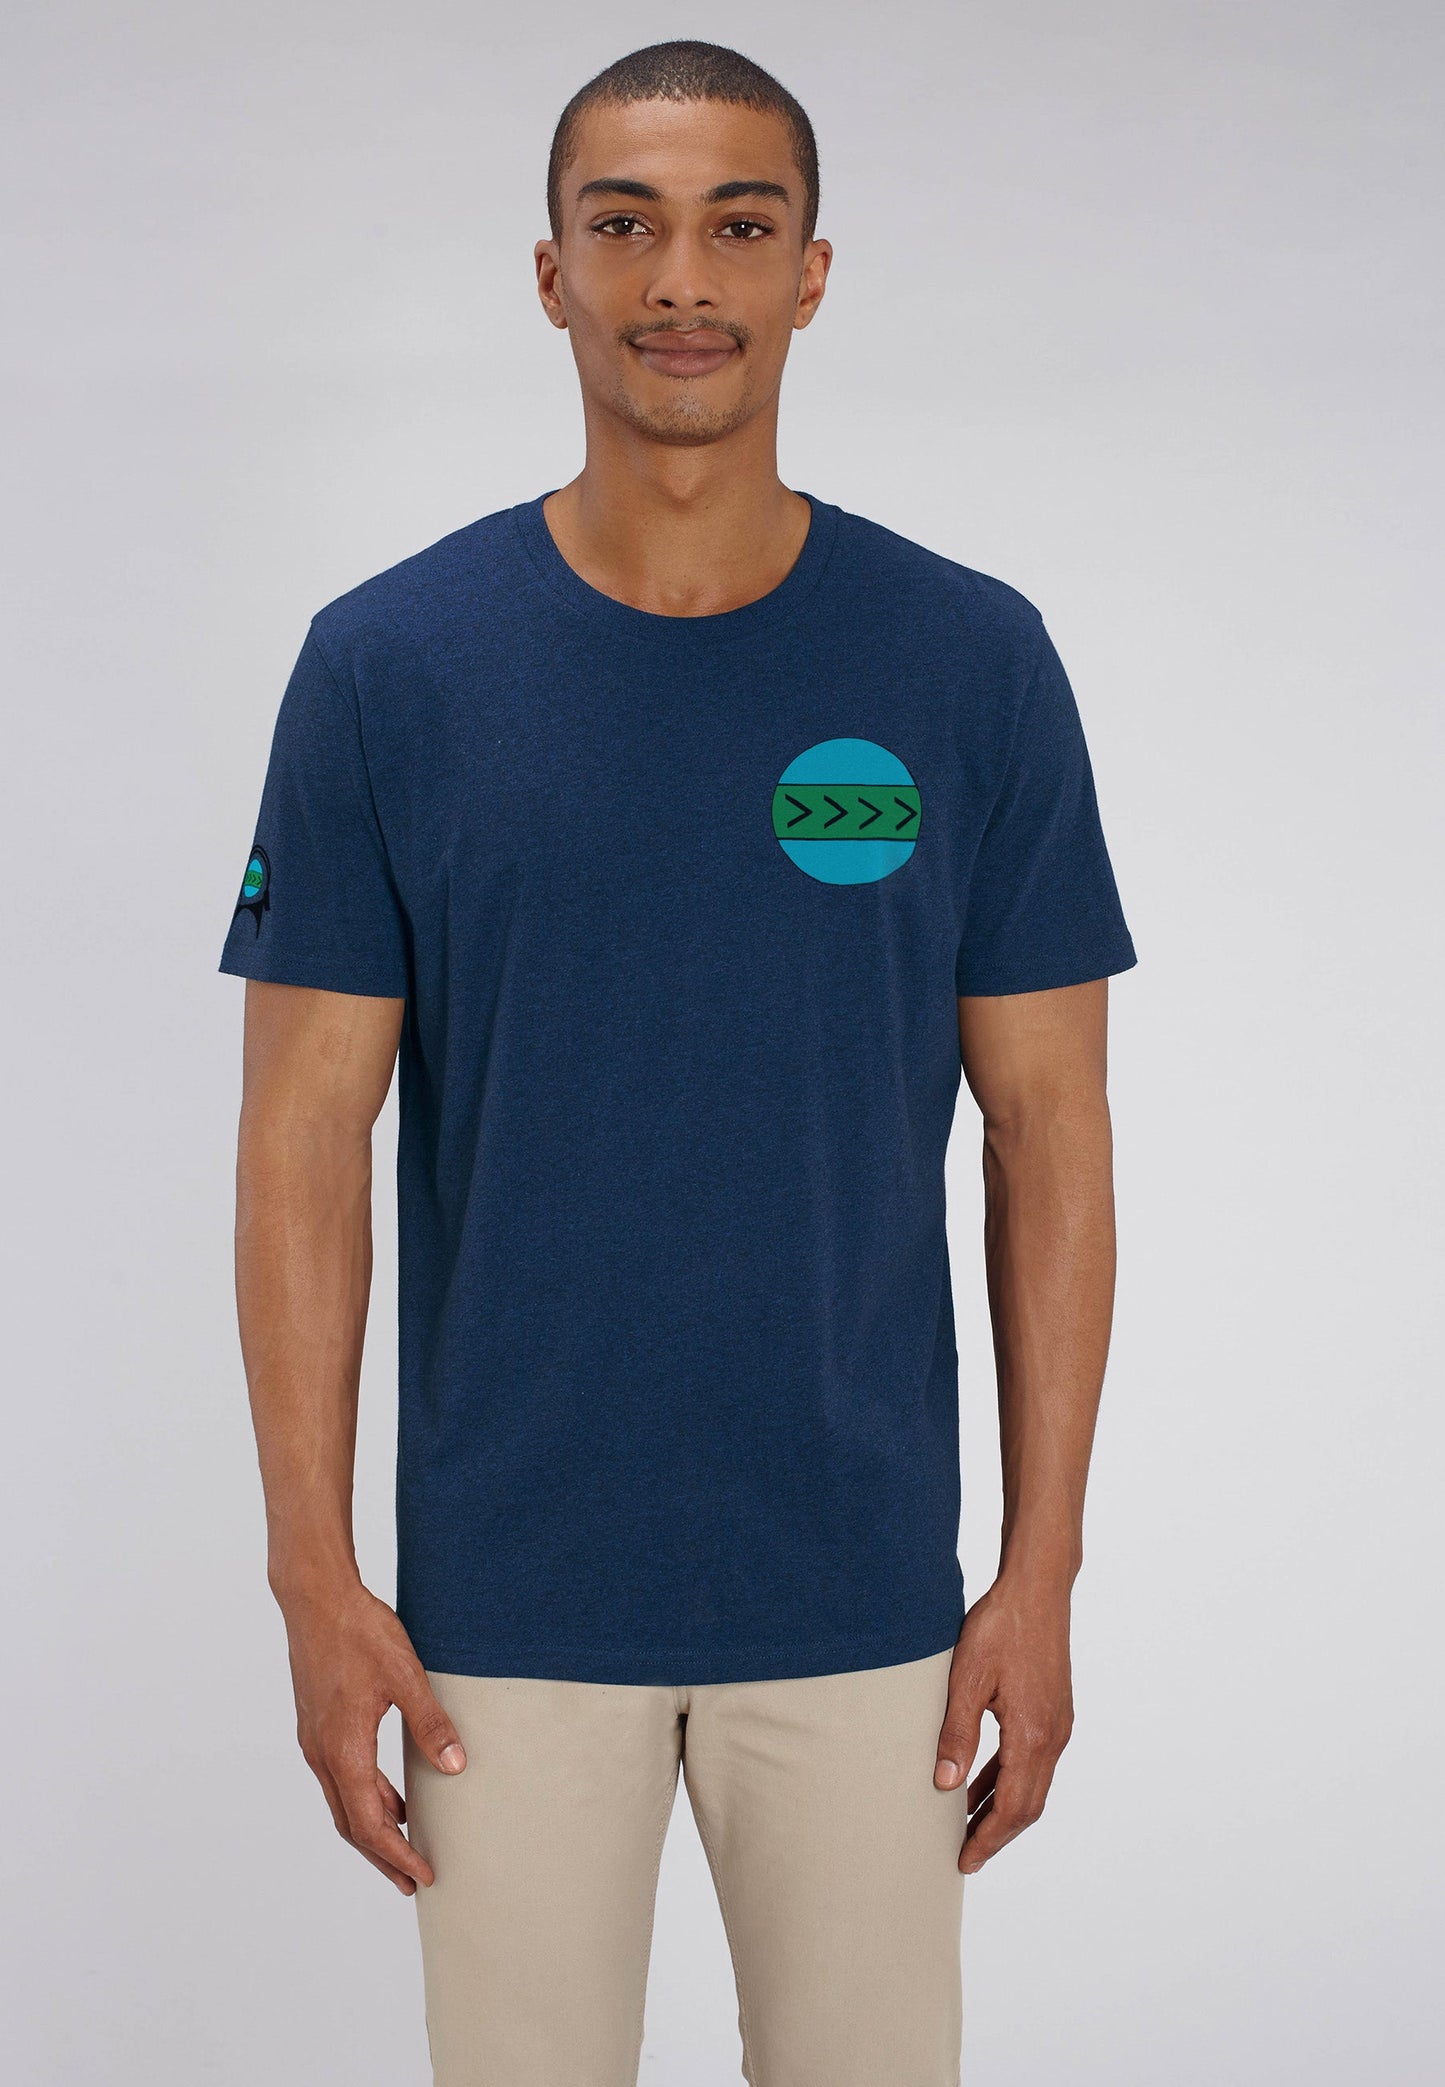 CAPRA-EARTH Unisex T-shirt , Vegan T-shirt in Black Heather Blue Cotton Jersey